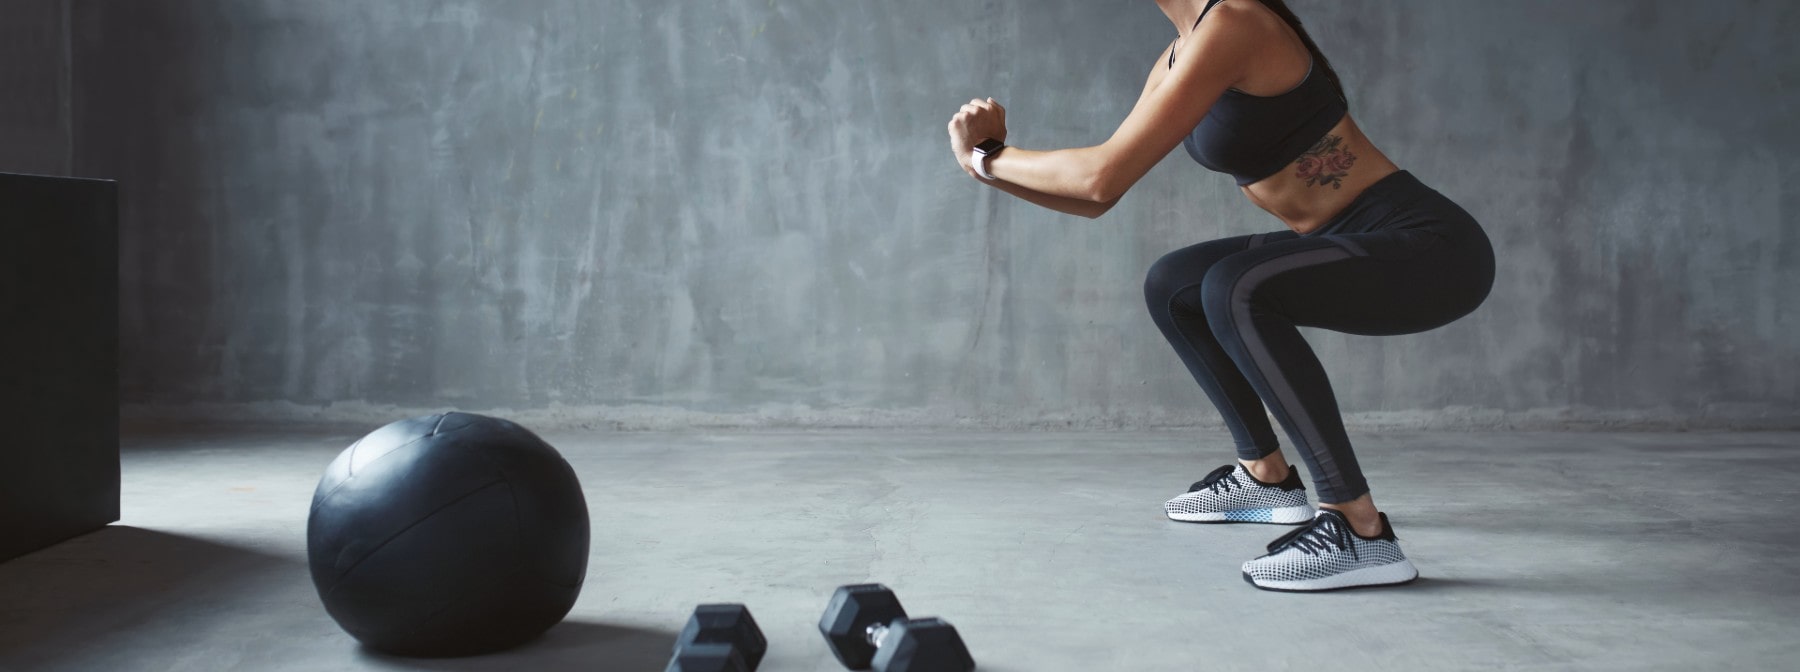 Leg-Destroying Dumbbell Workout  Top 8 Dumbbell Exercises for Legs -  MYPROTEIN™